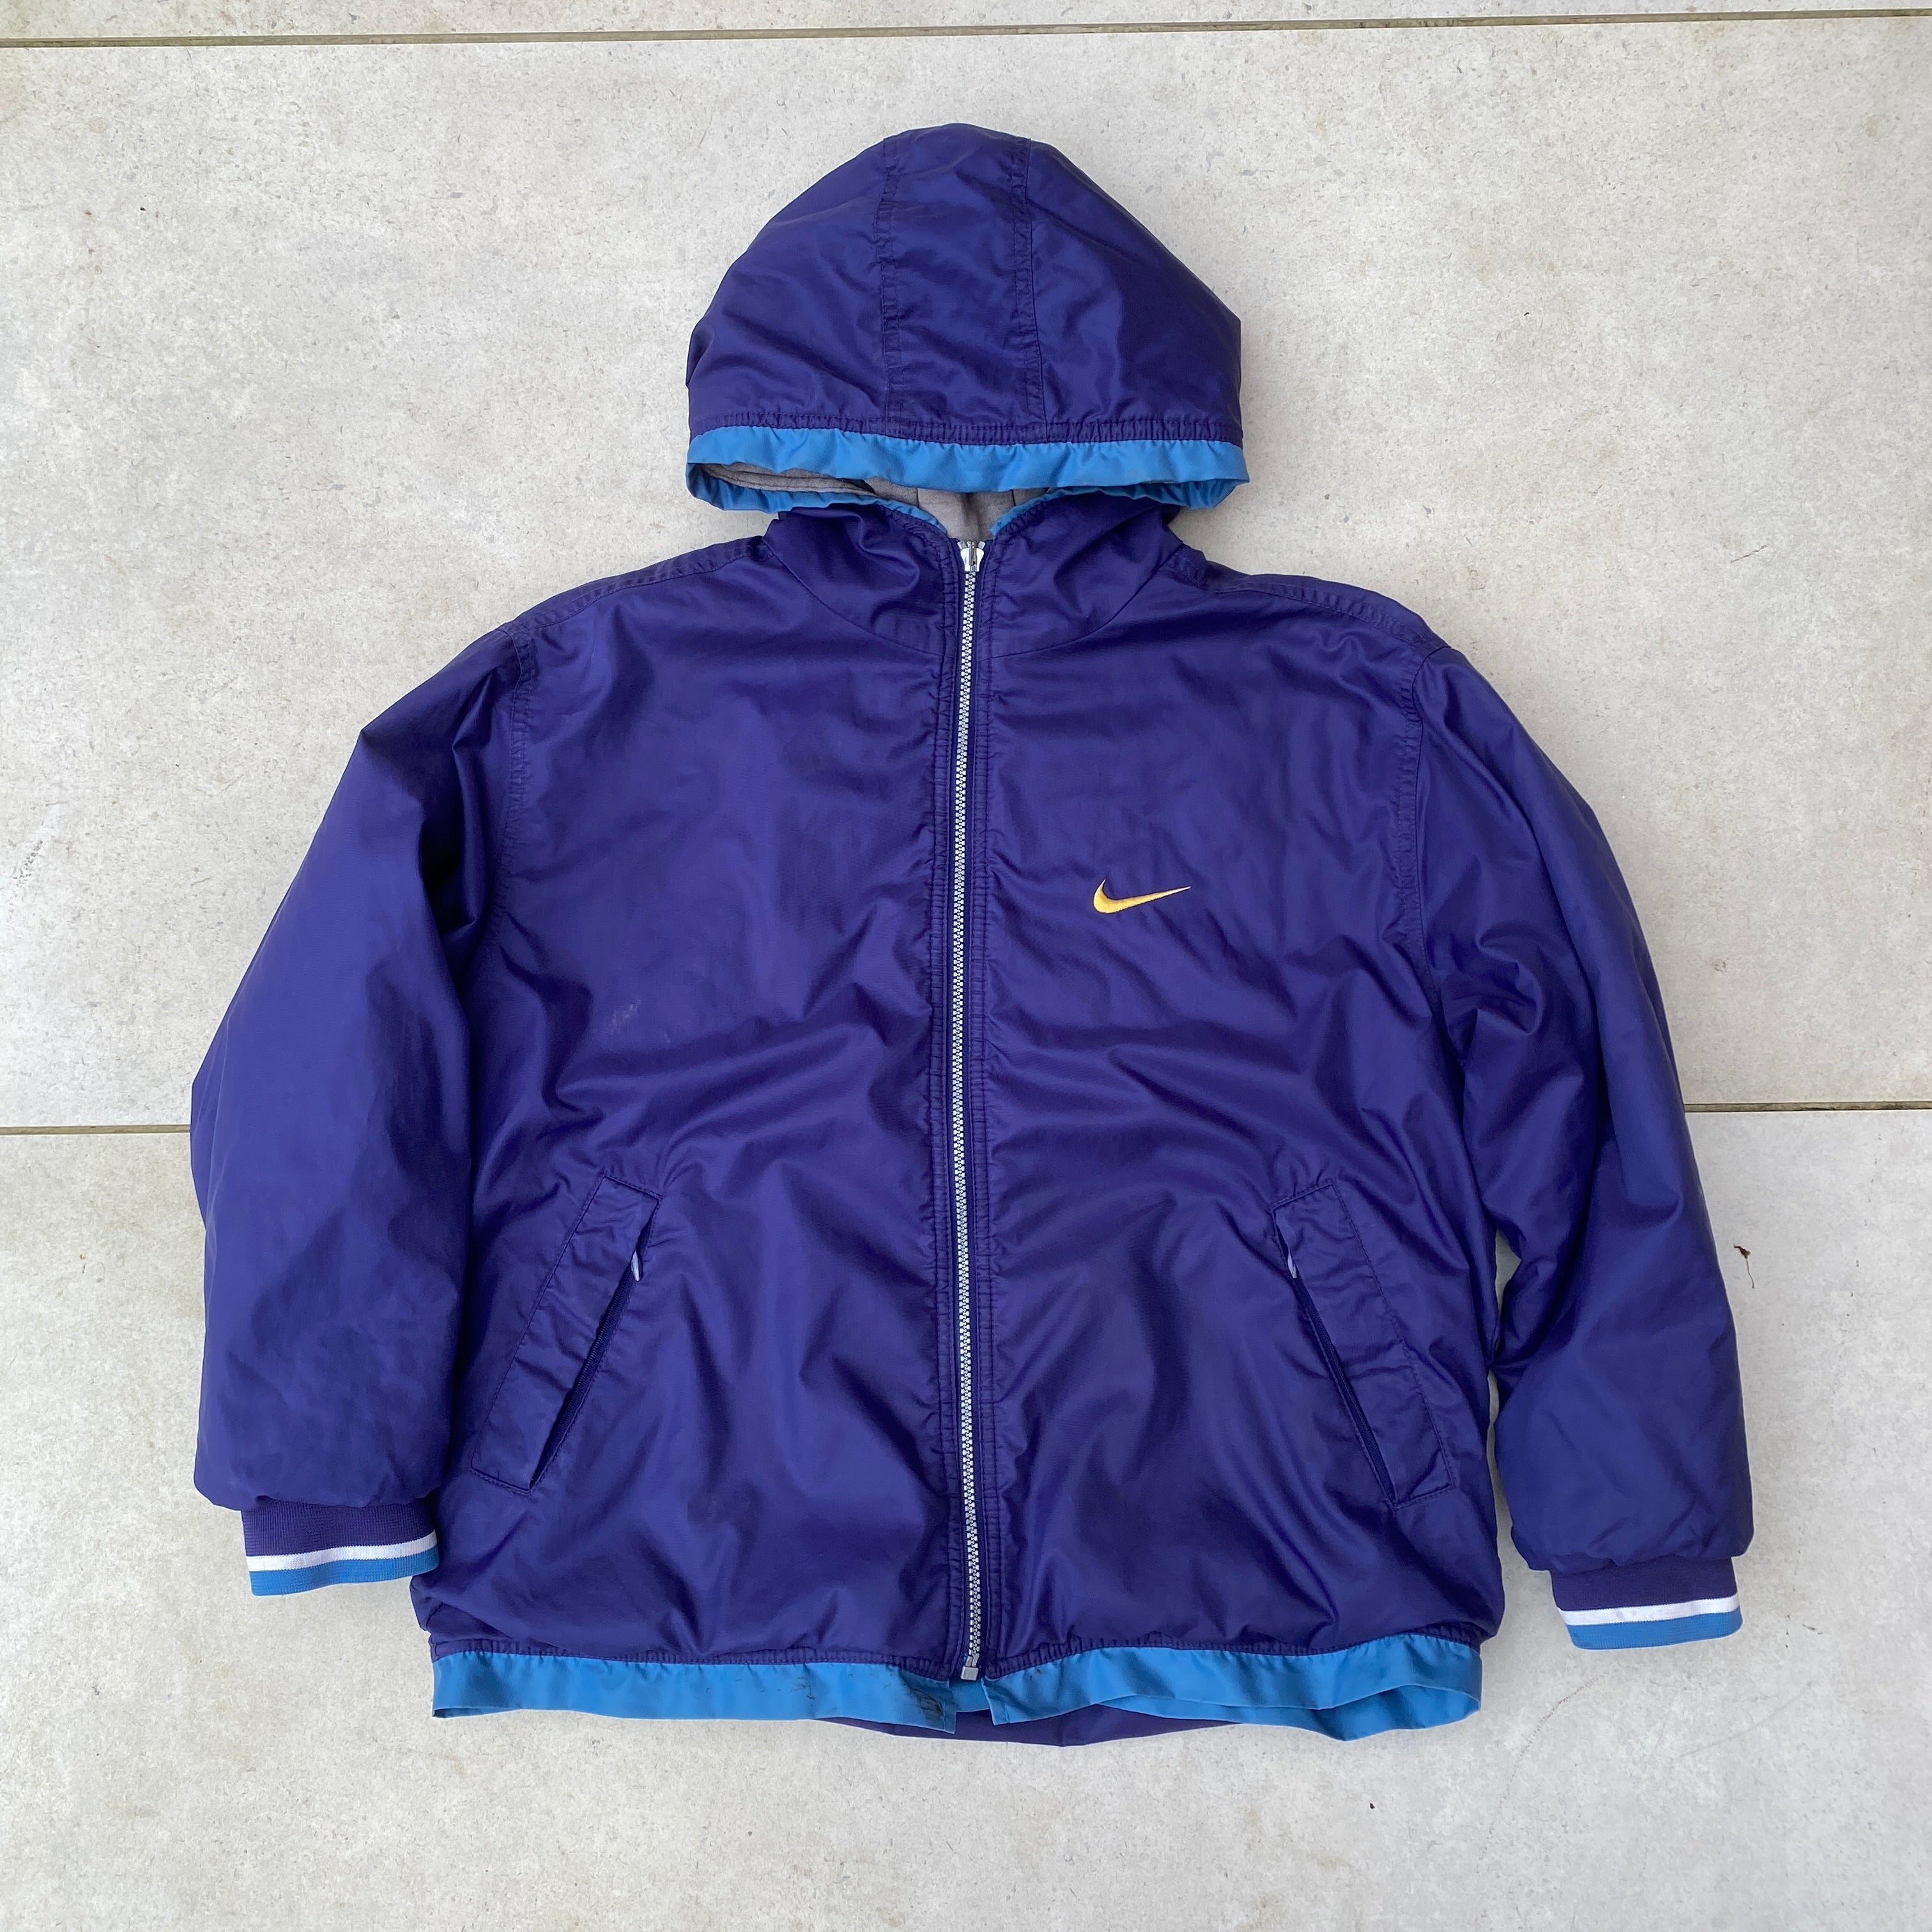 90s Nike Reversible Puffer Jacket Purple Large